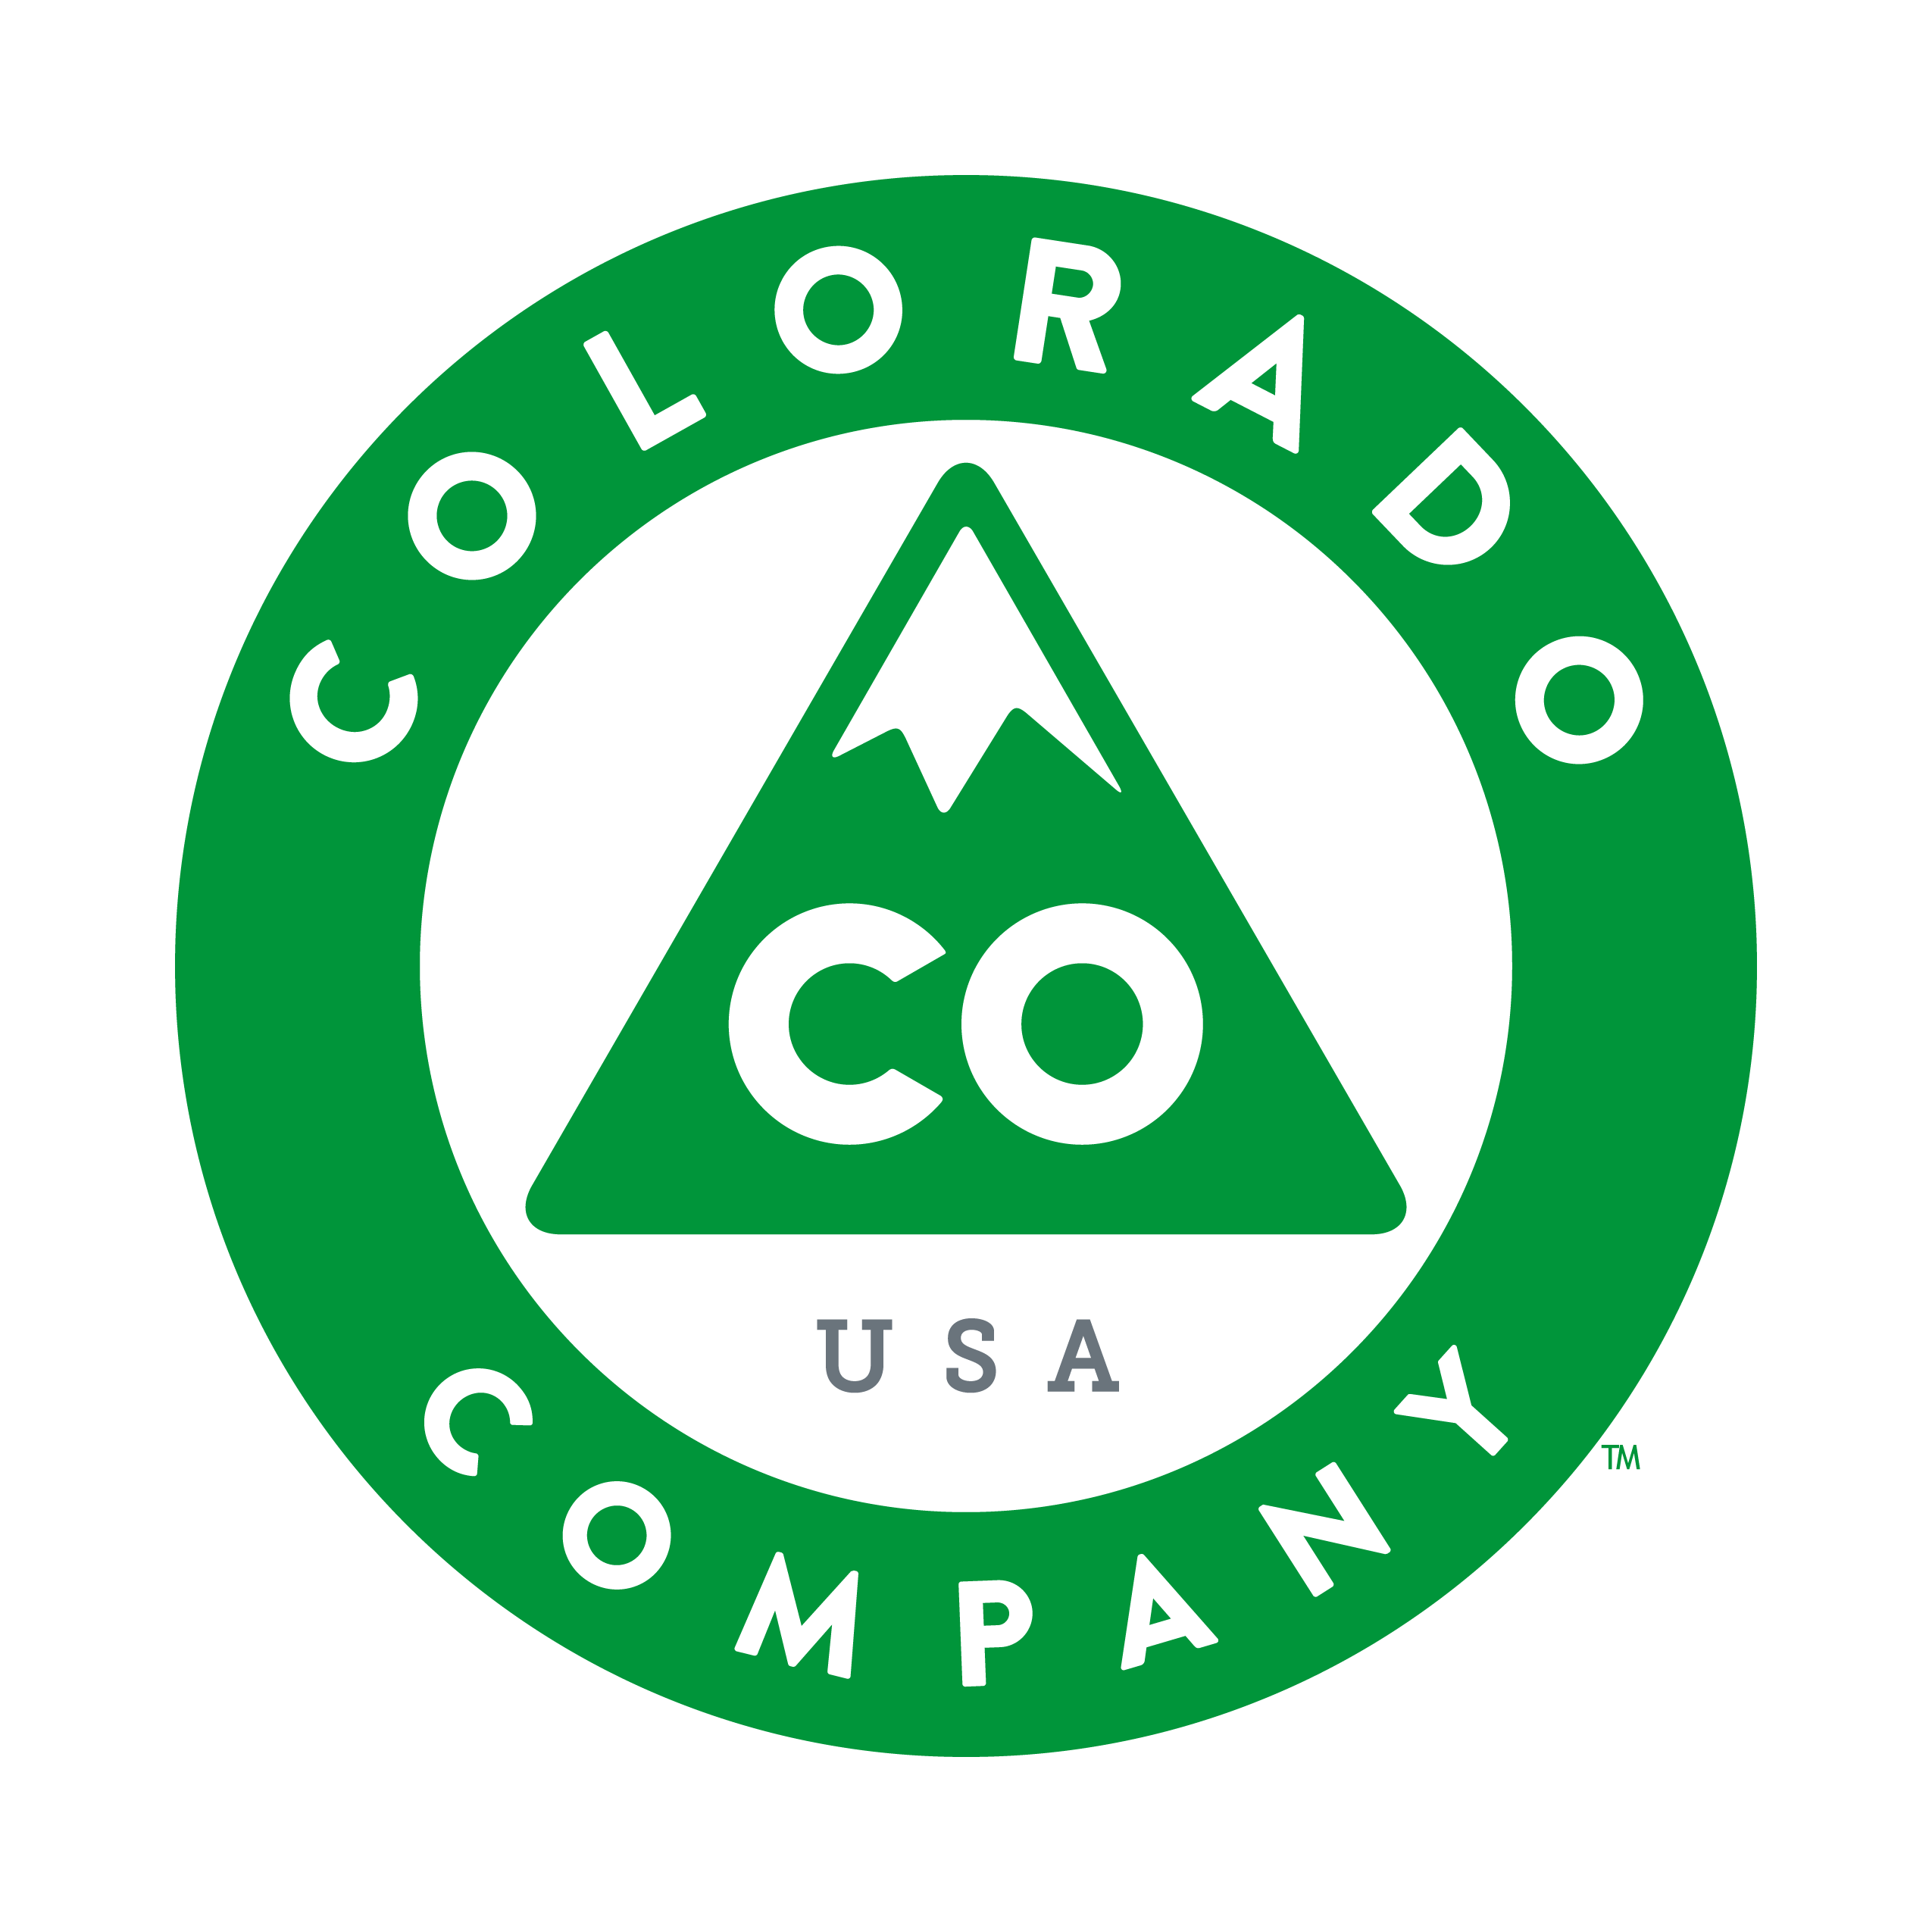 Tall Guns is a Colorado company and displays the Colorado Company logo under license